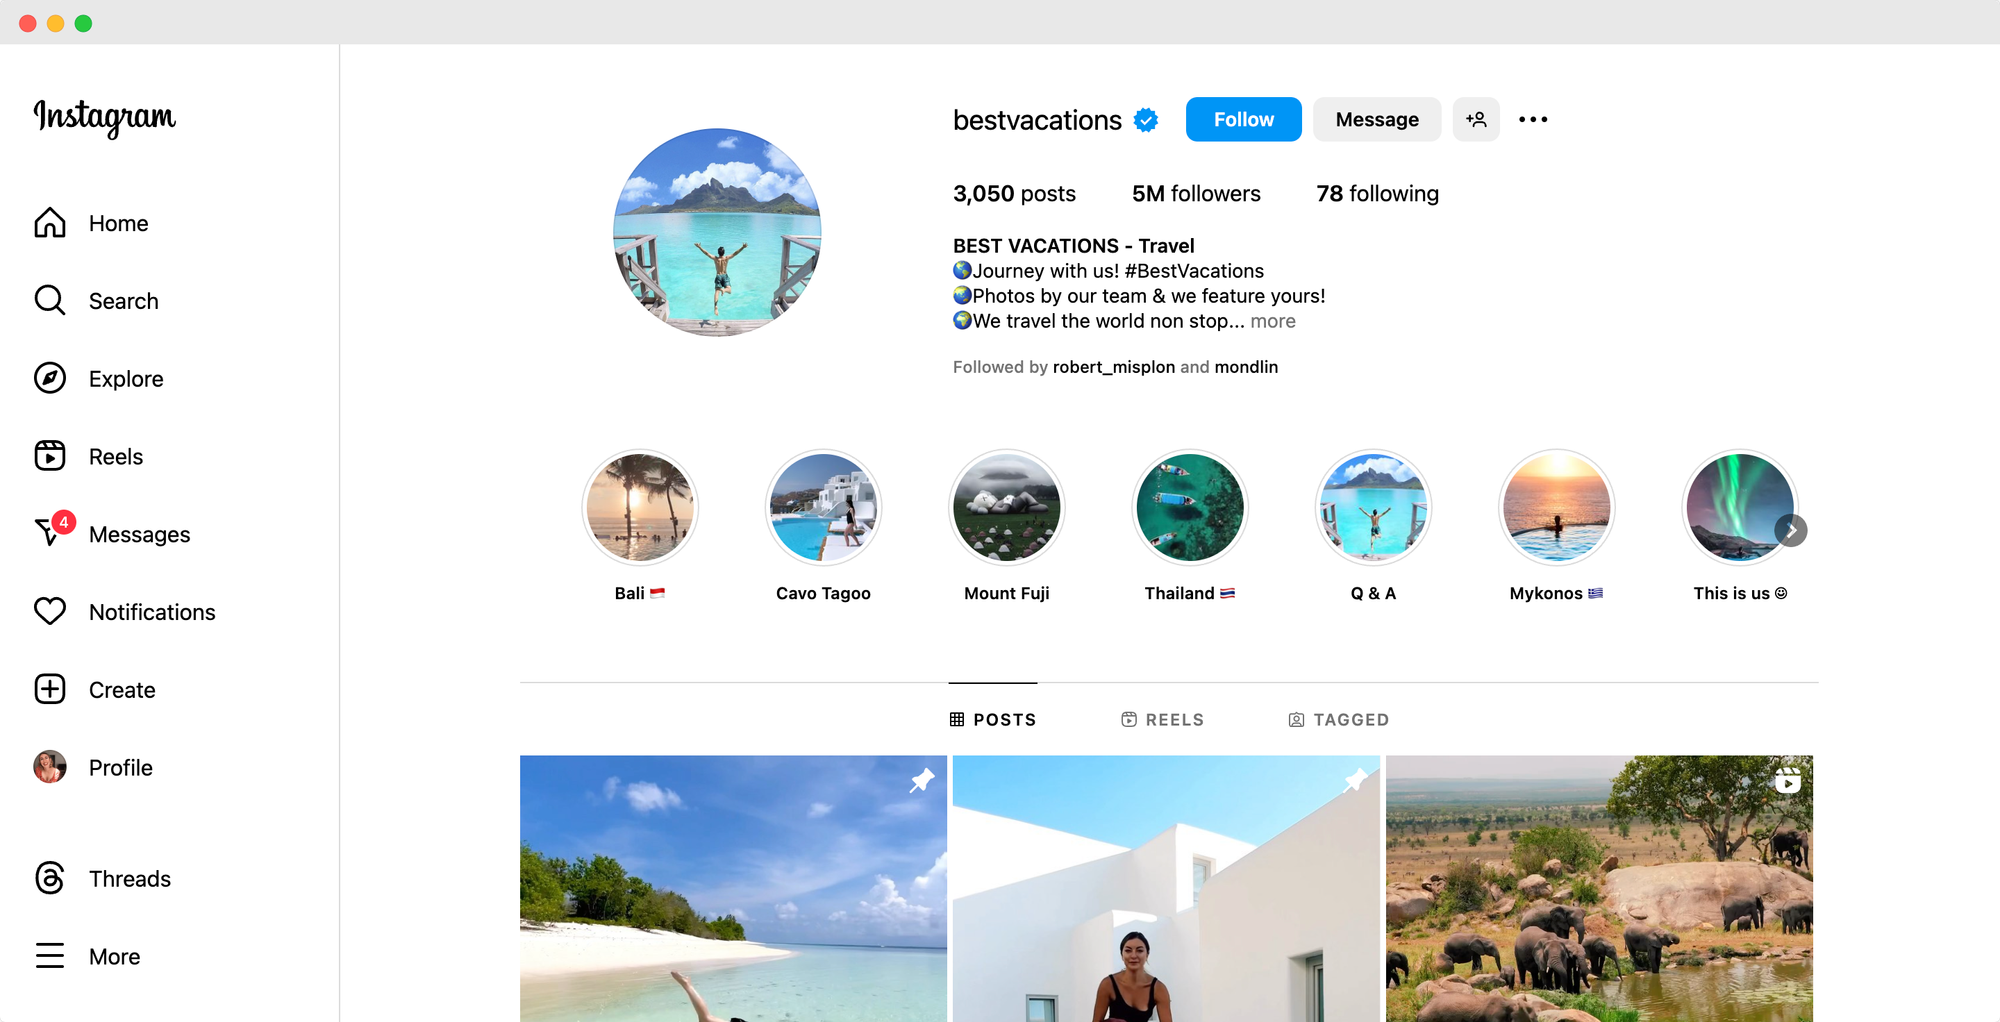 Best Vacation's Instagram profile